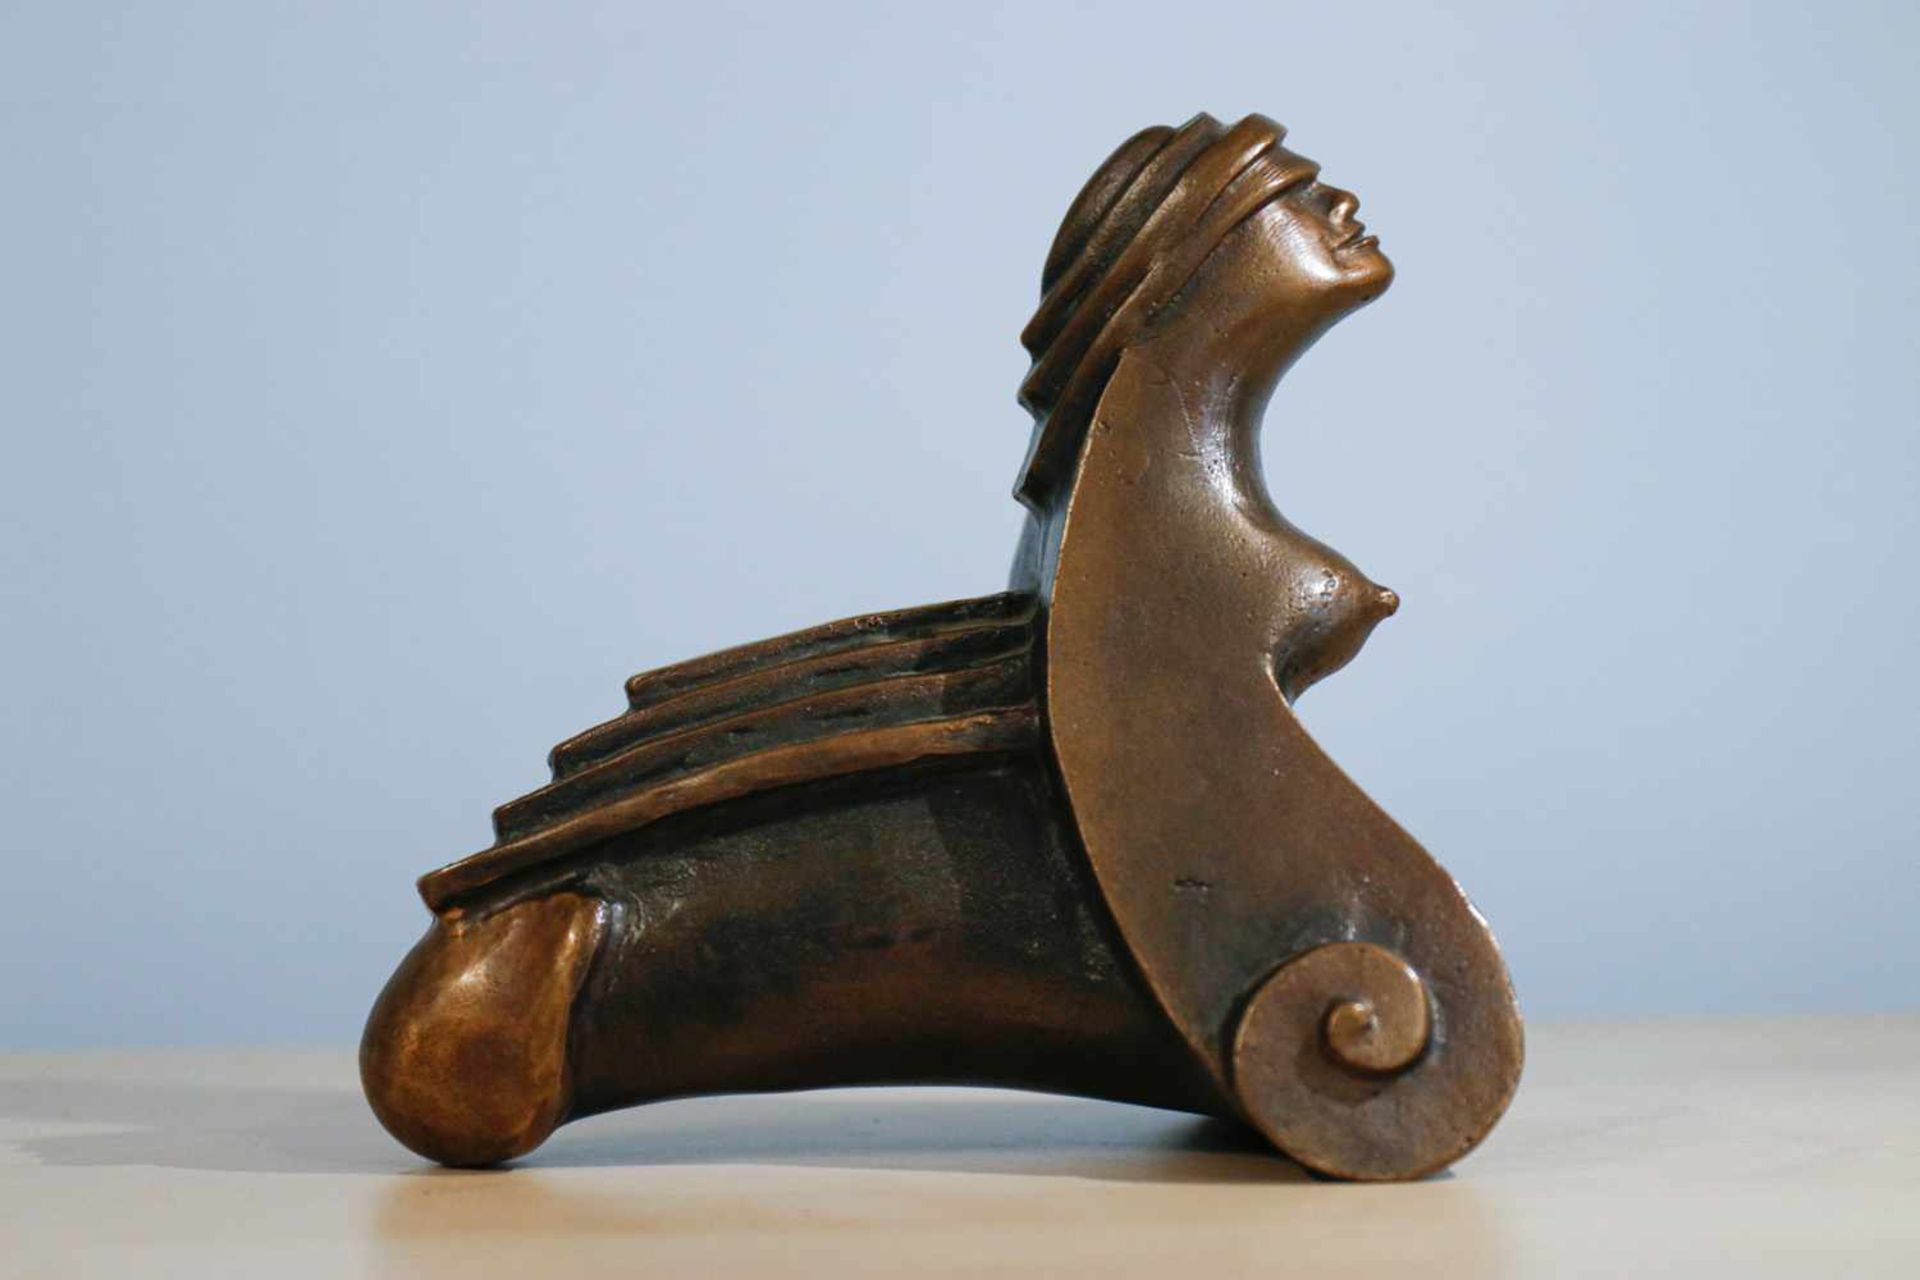 Tom Lehnigk, "Engel" Bronze 0/50, 2006, Erotika, 10 x 13,5 x 14 cm- - -22.50 % buyer's premium on